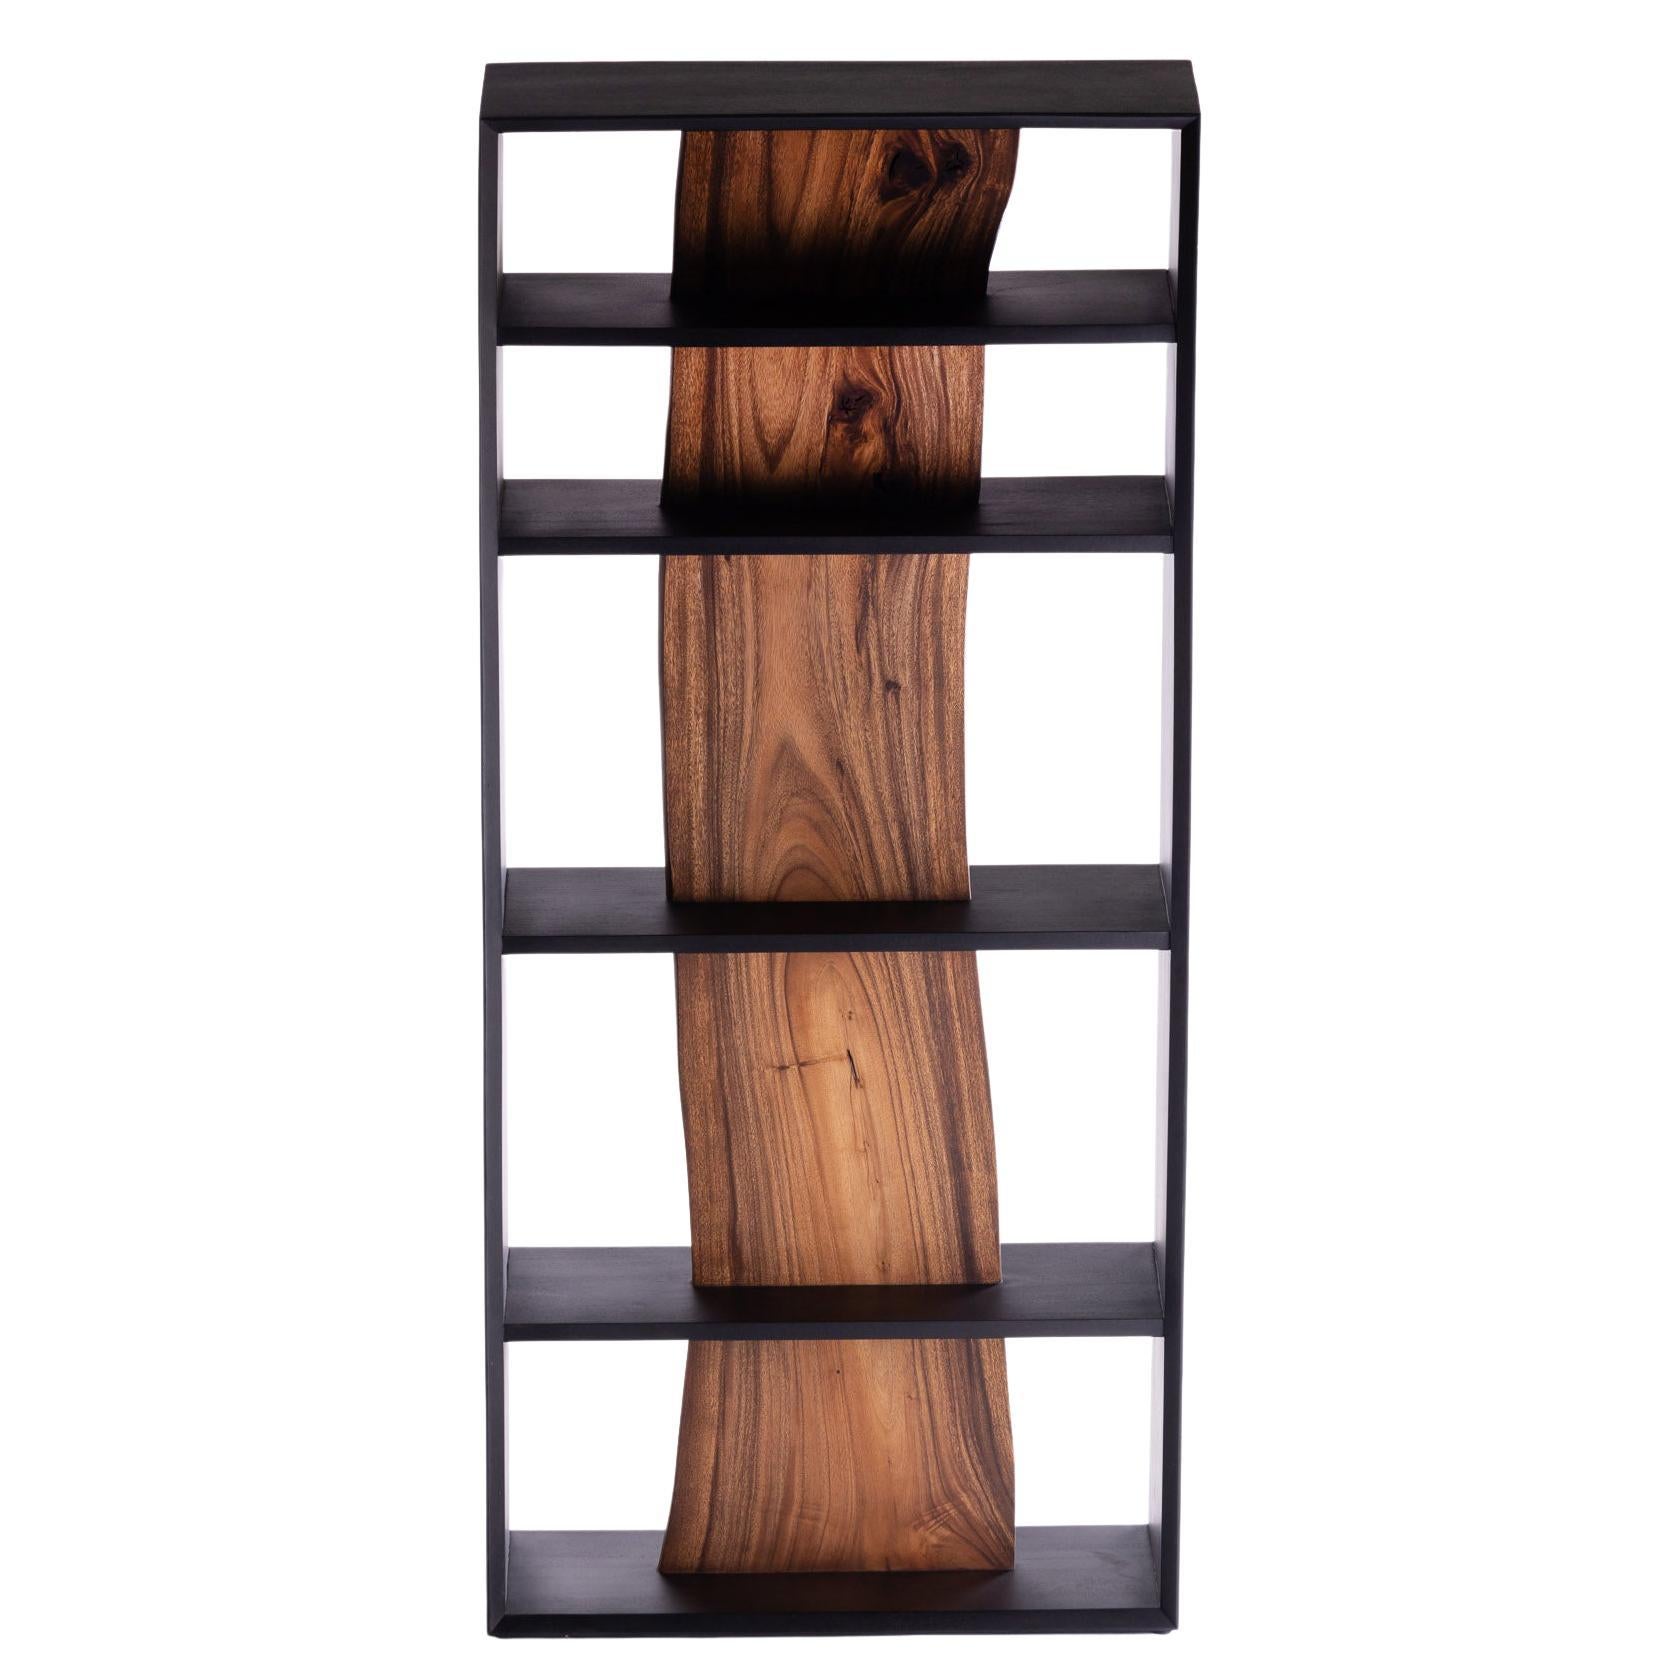 Darakorn Vertical Shelf, Two Tone Wood (Charcoal Black body + Natural Slab) For Sale